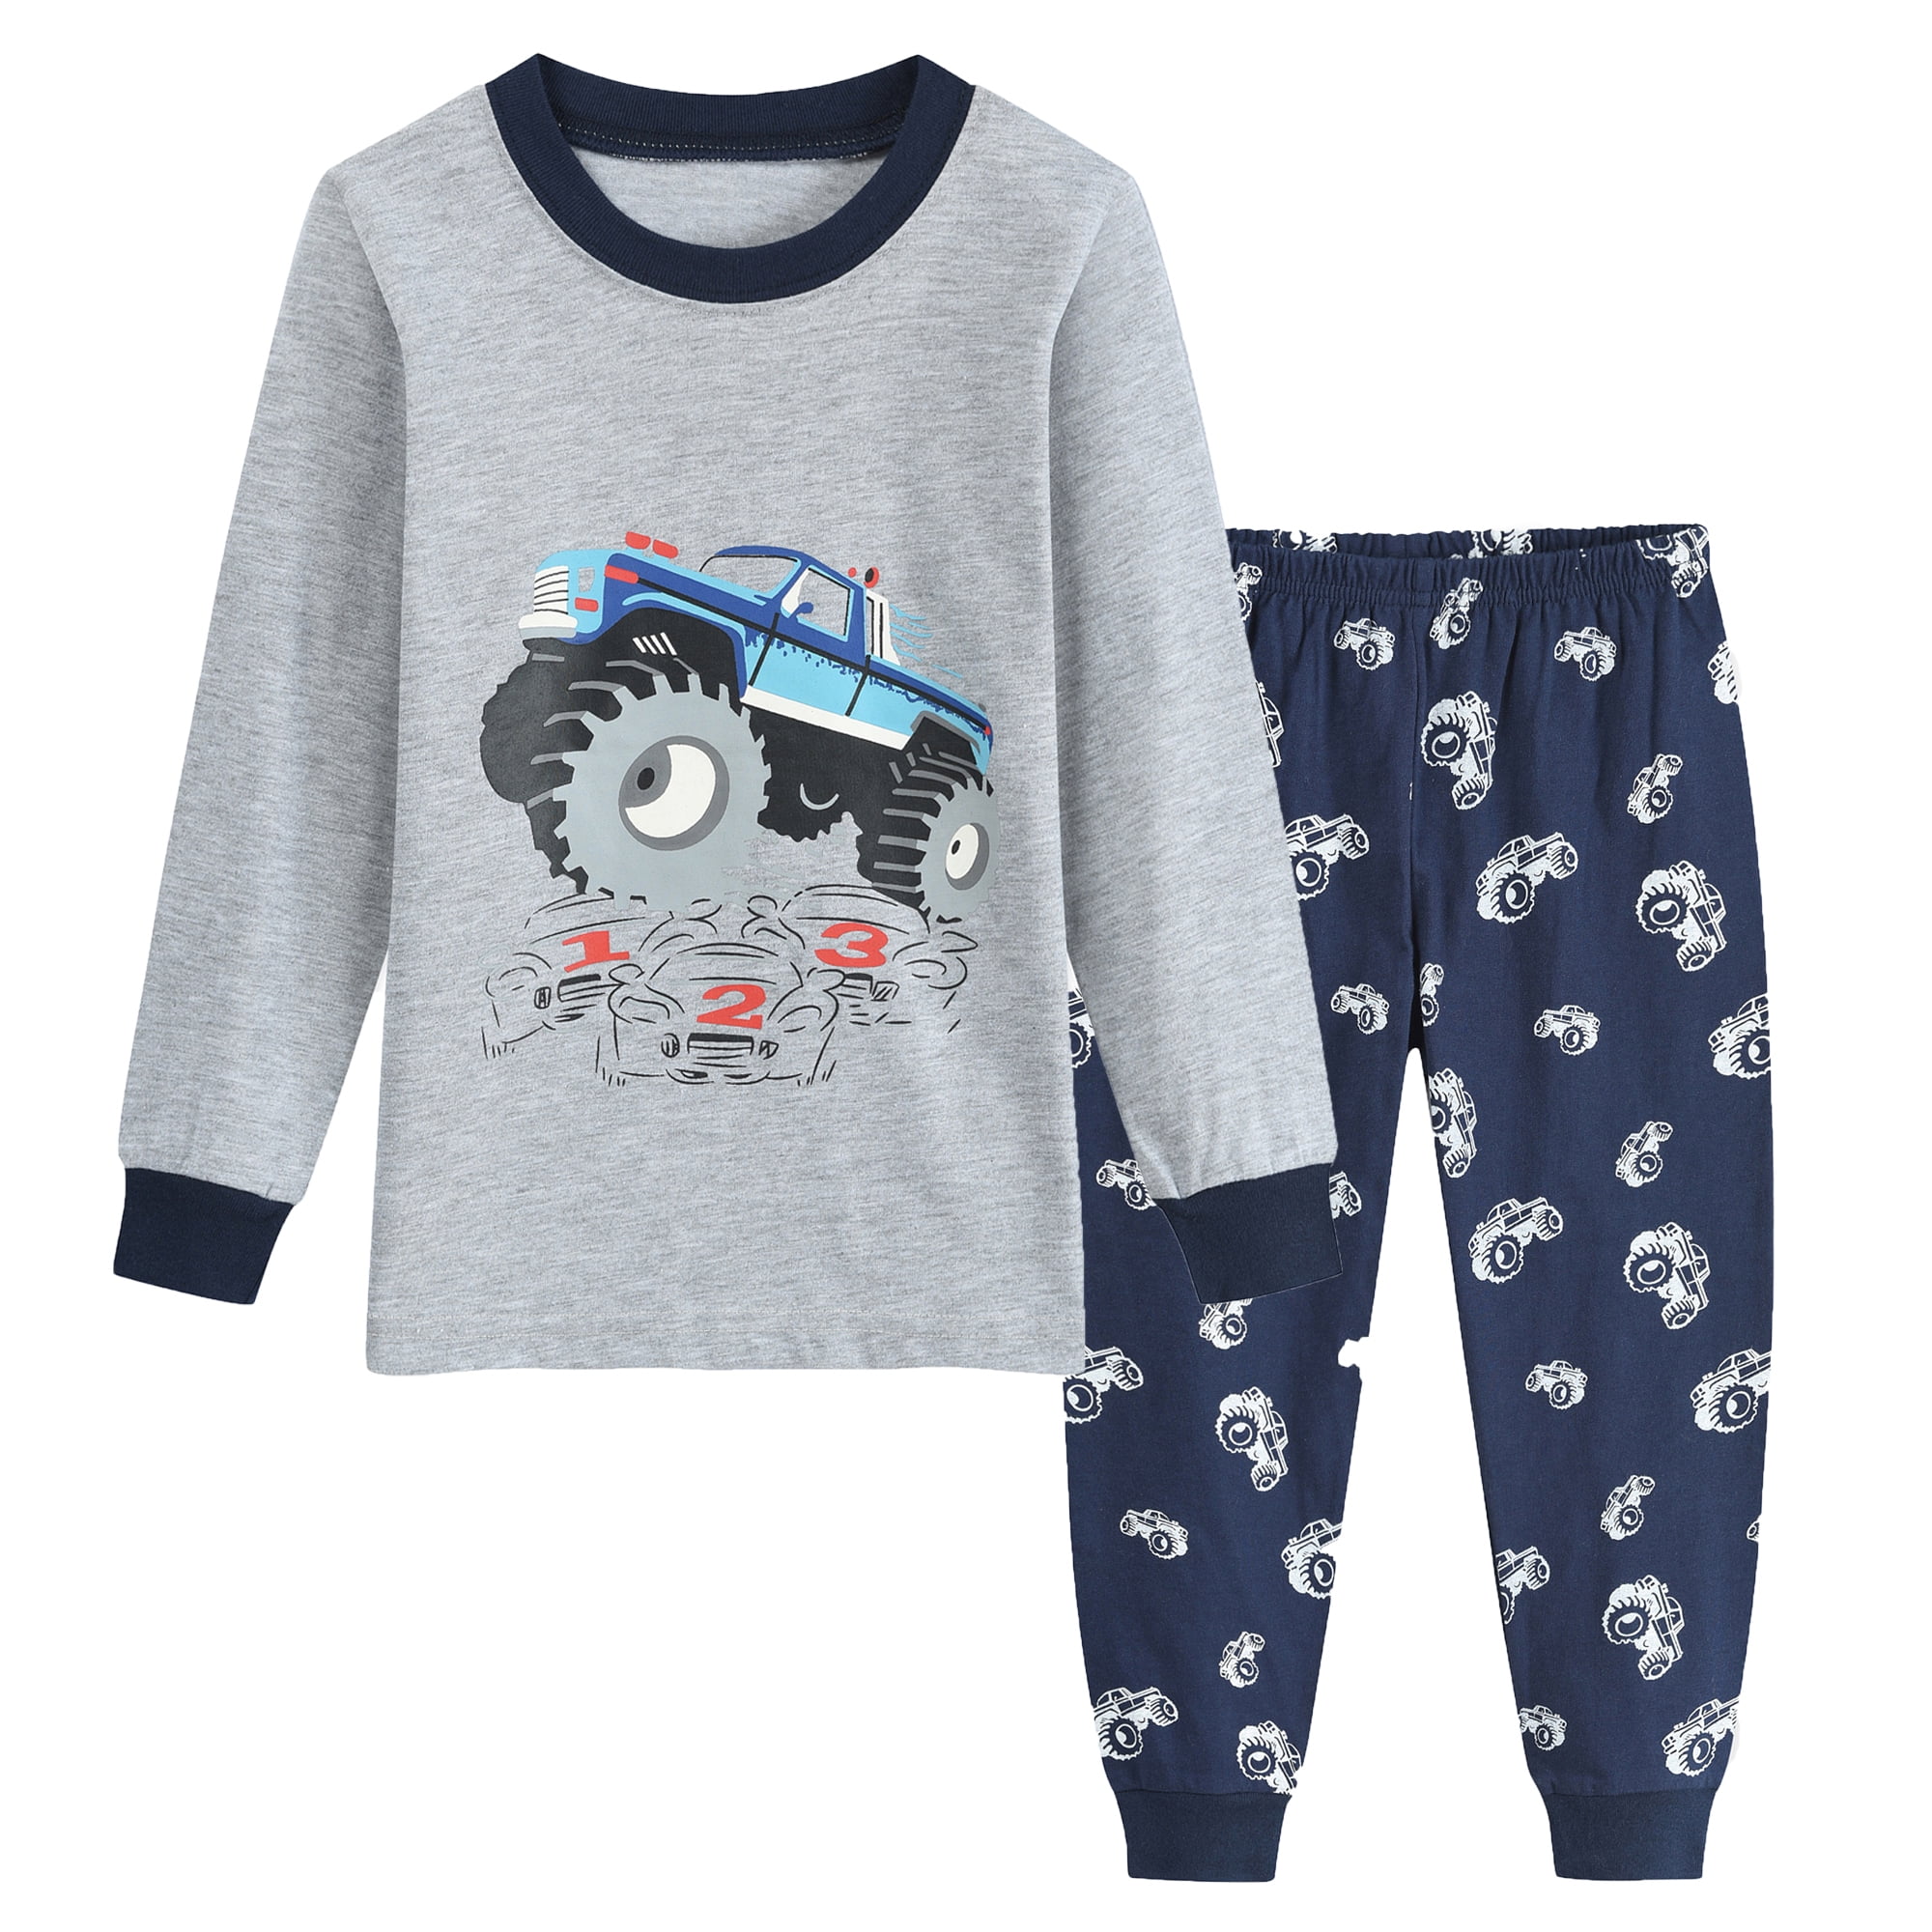 Family Feeling Dinosaur Little Boys Kids Pajamas Sets 100% Cotton Long sleeve Pjs 